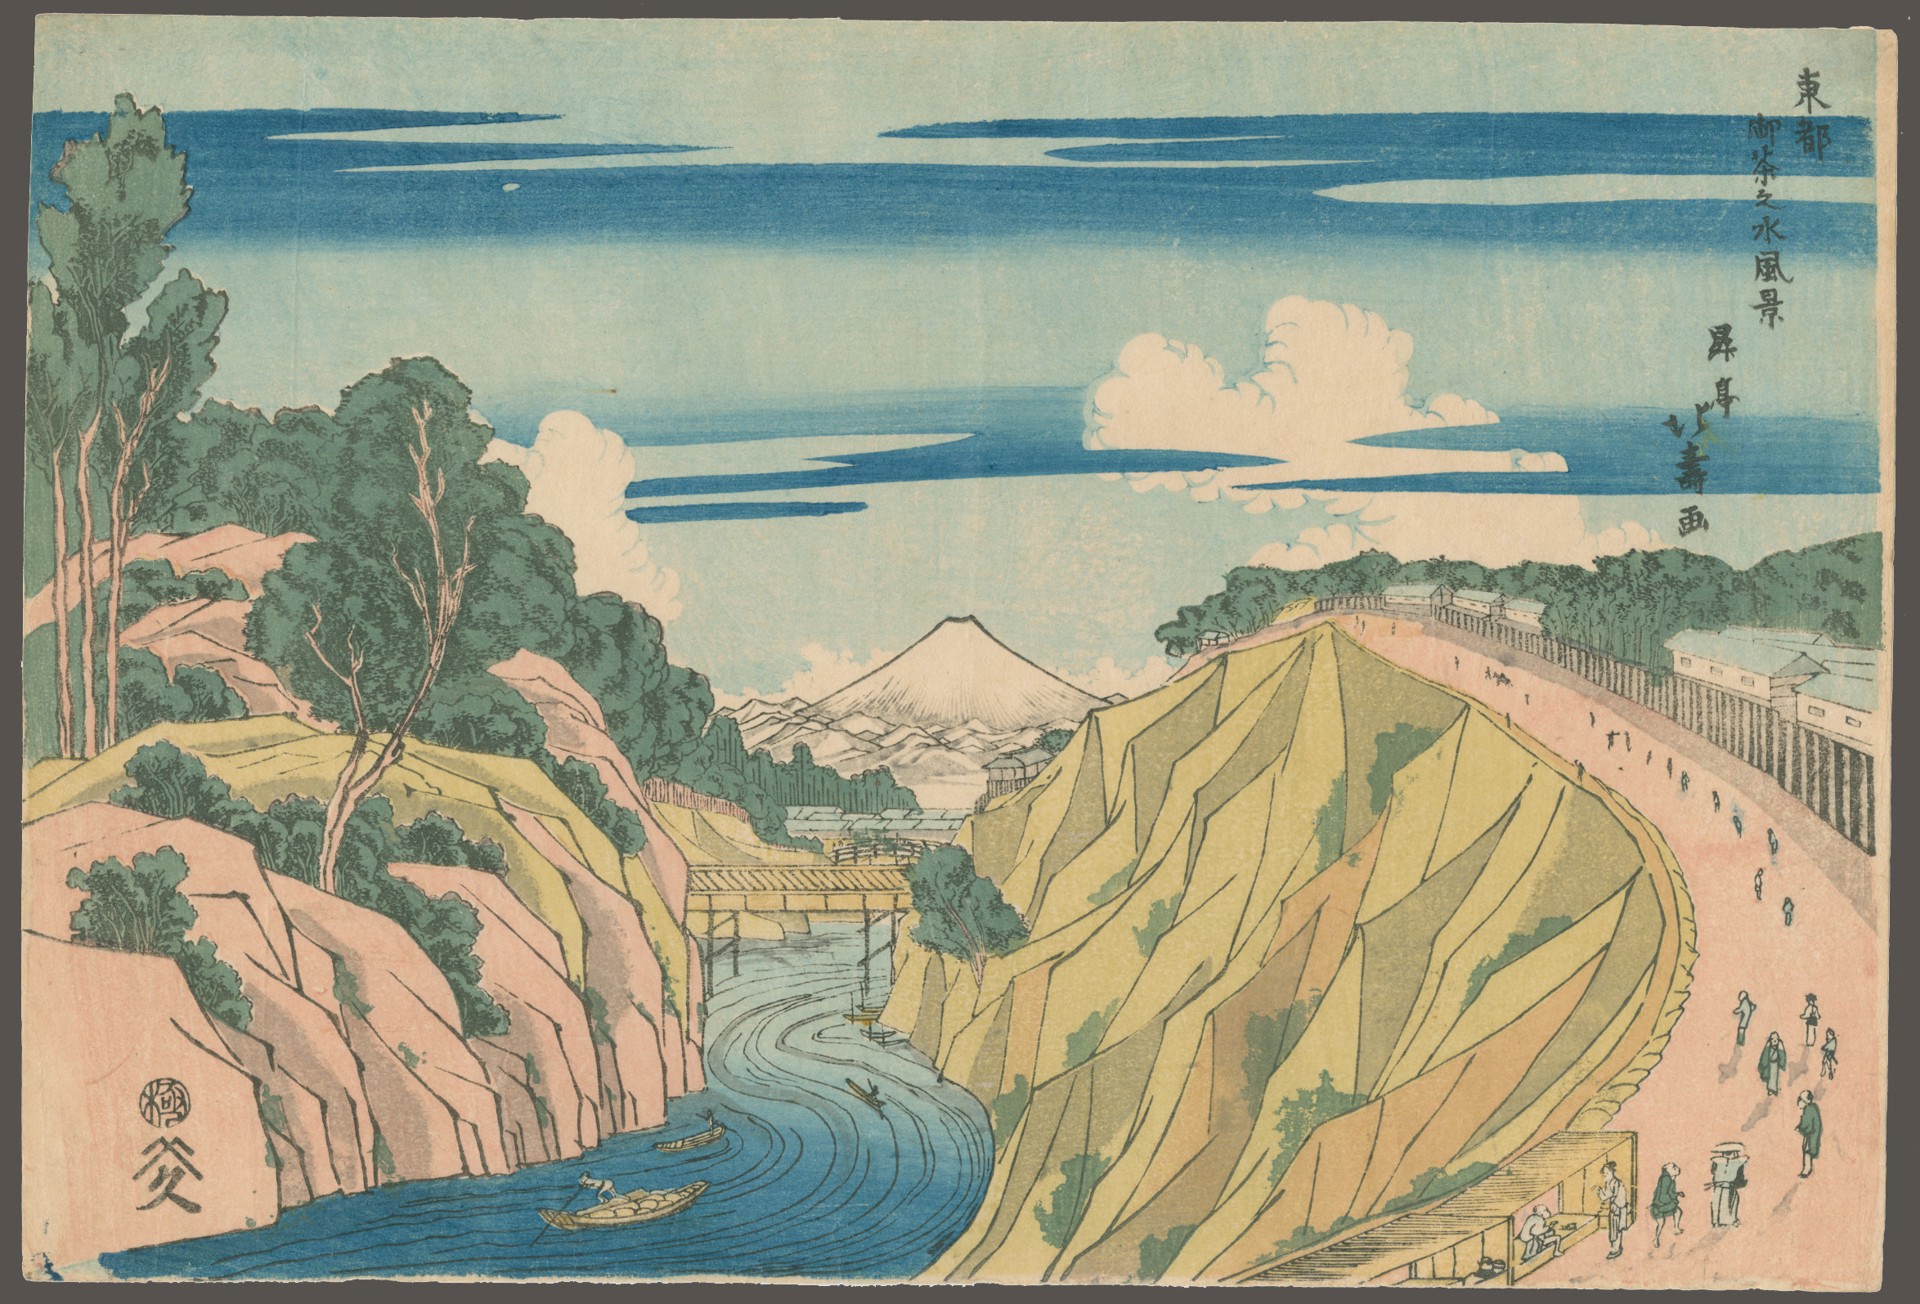 Ochanomizu Toto Meisho (Famous Views of the Eastern Capital) by Hokuju